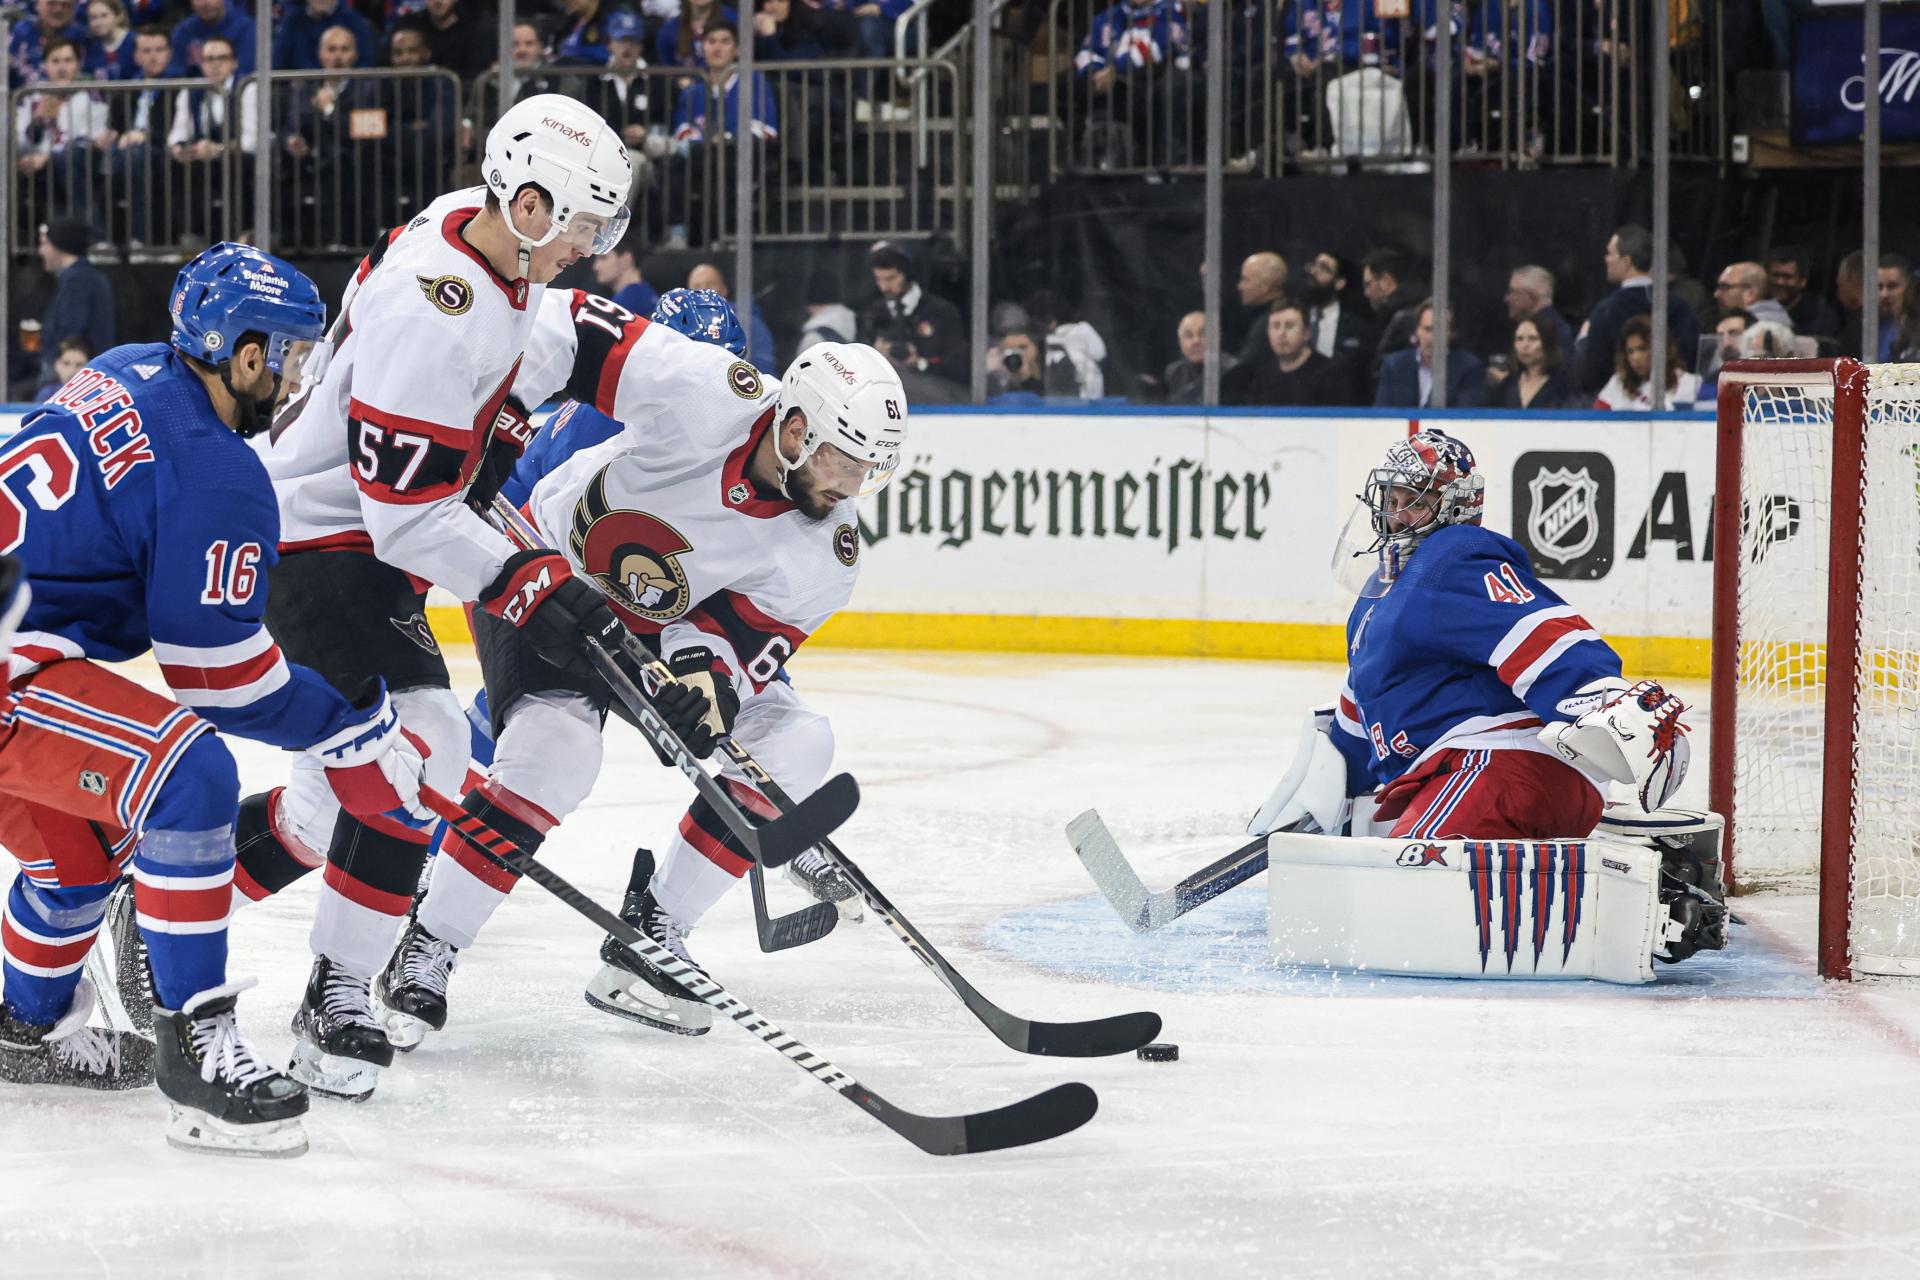 Halák v NHL nezabránil prehre Rangers s Ottawou, Černák nedohral proti Penguins